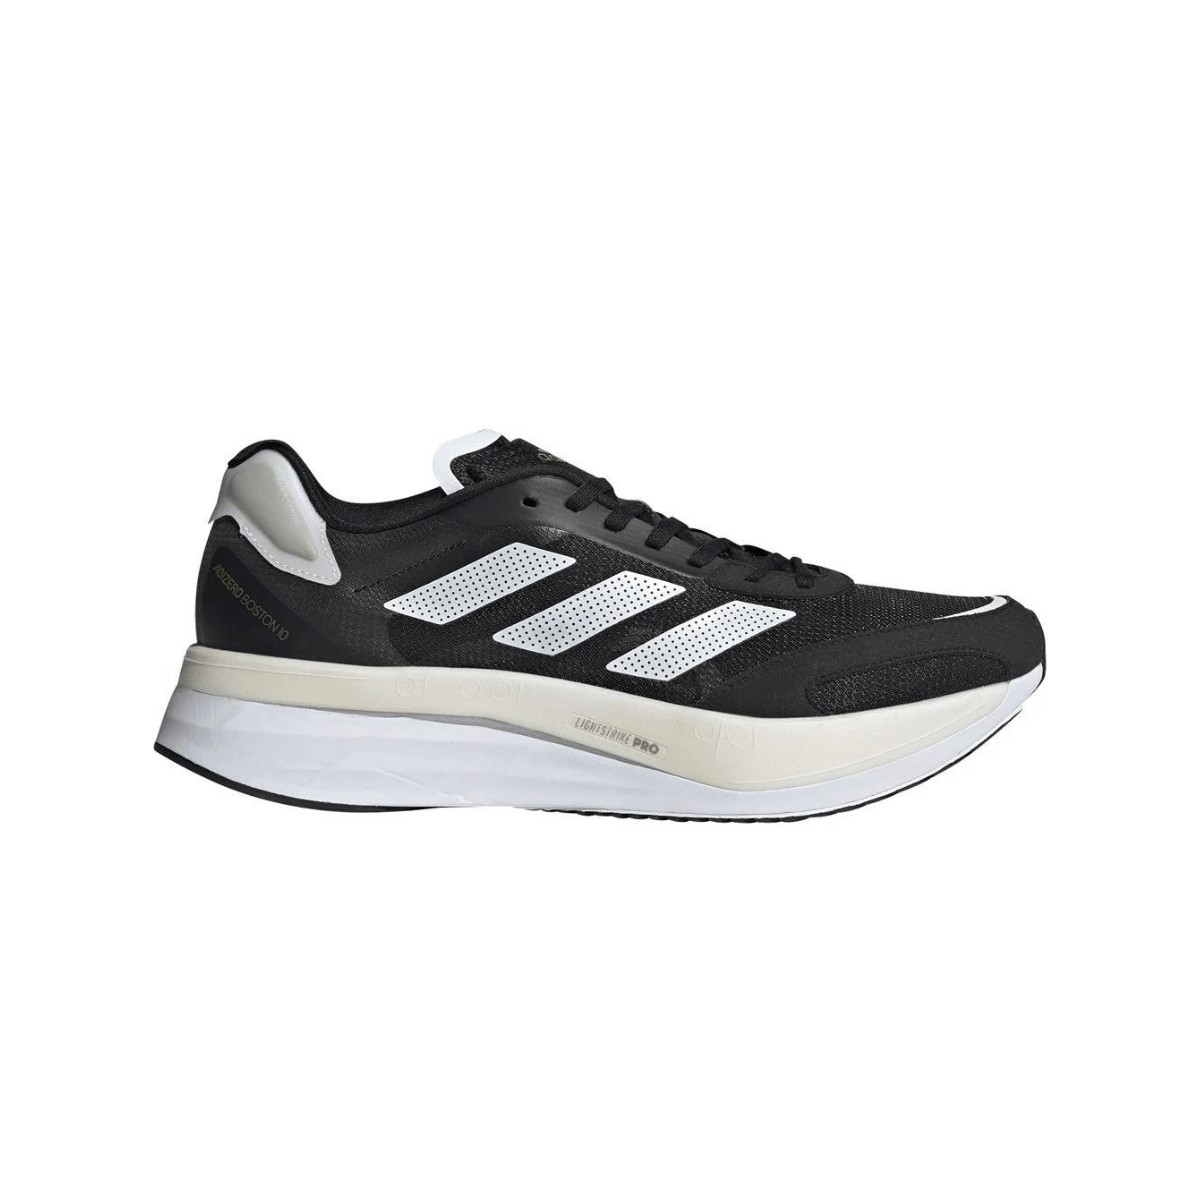 Condicional alabanza Incorporar Buy Adidas Adizero Boston 10 Running Shoes at the Best Price.